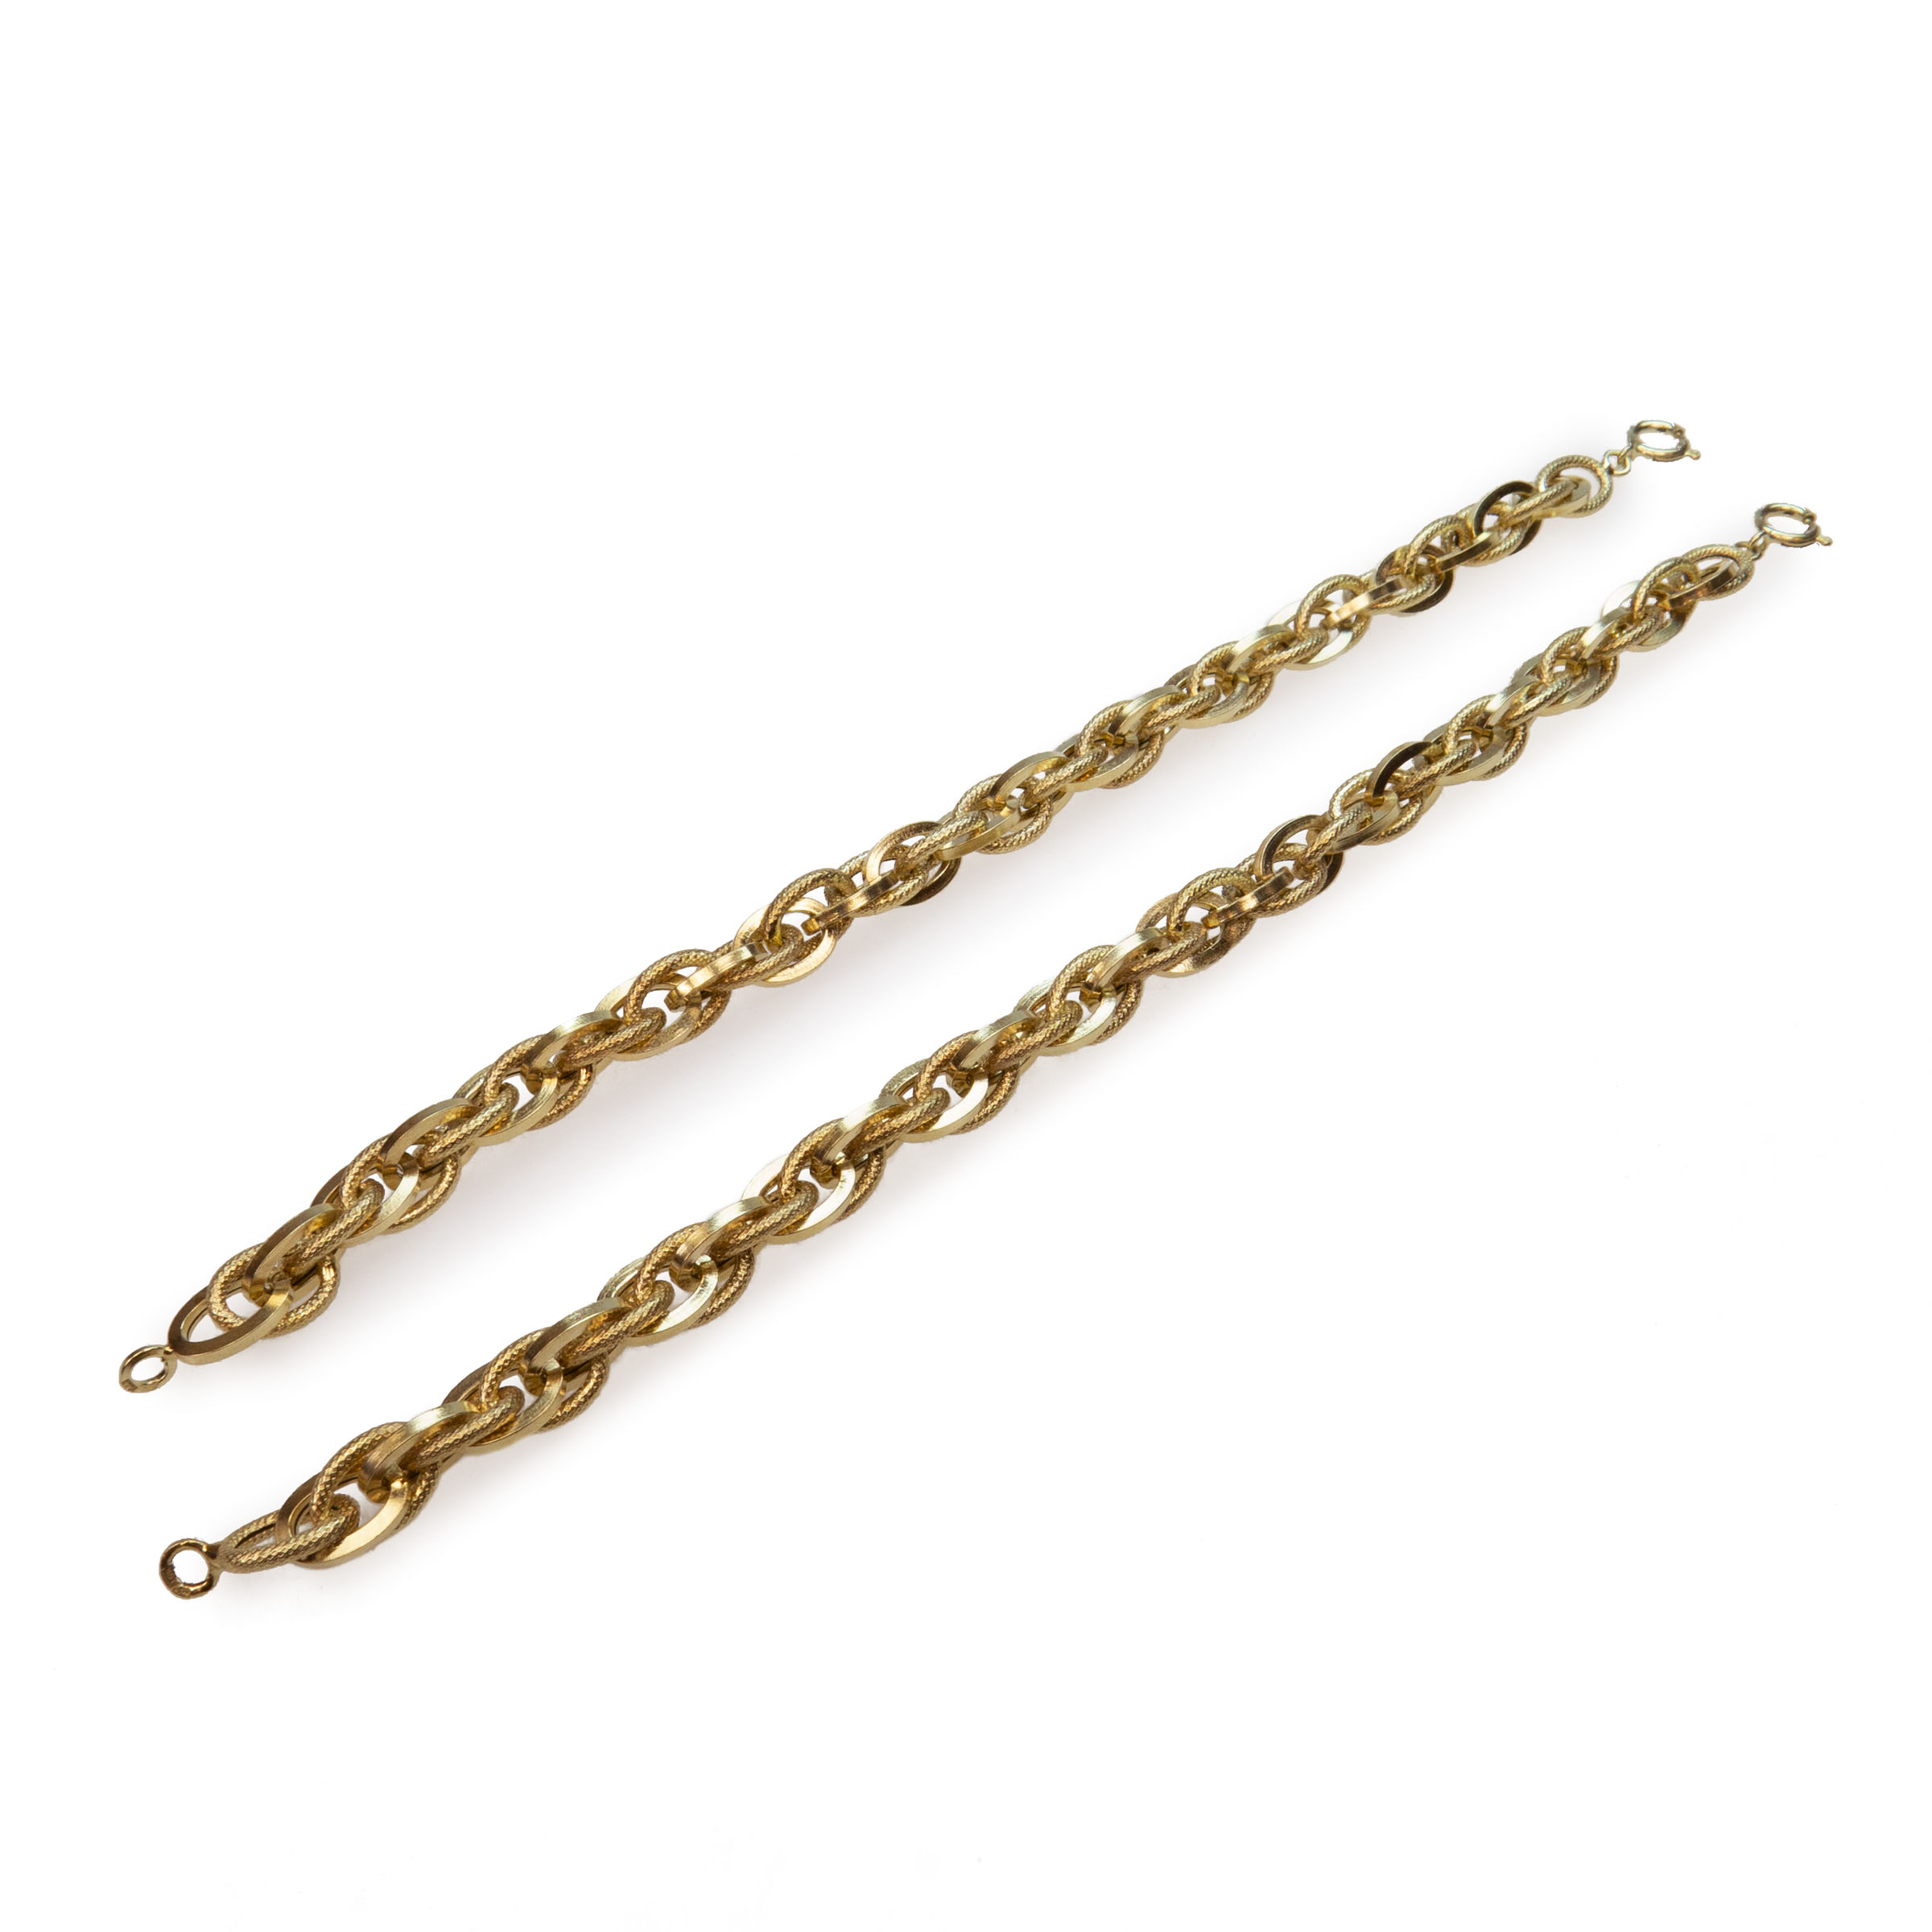 2 x 14K Yellow Gold Link Bracelets